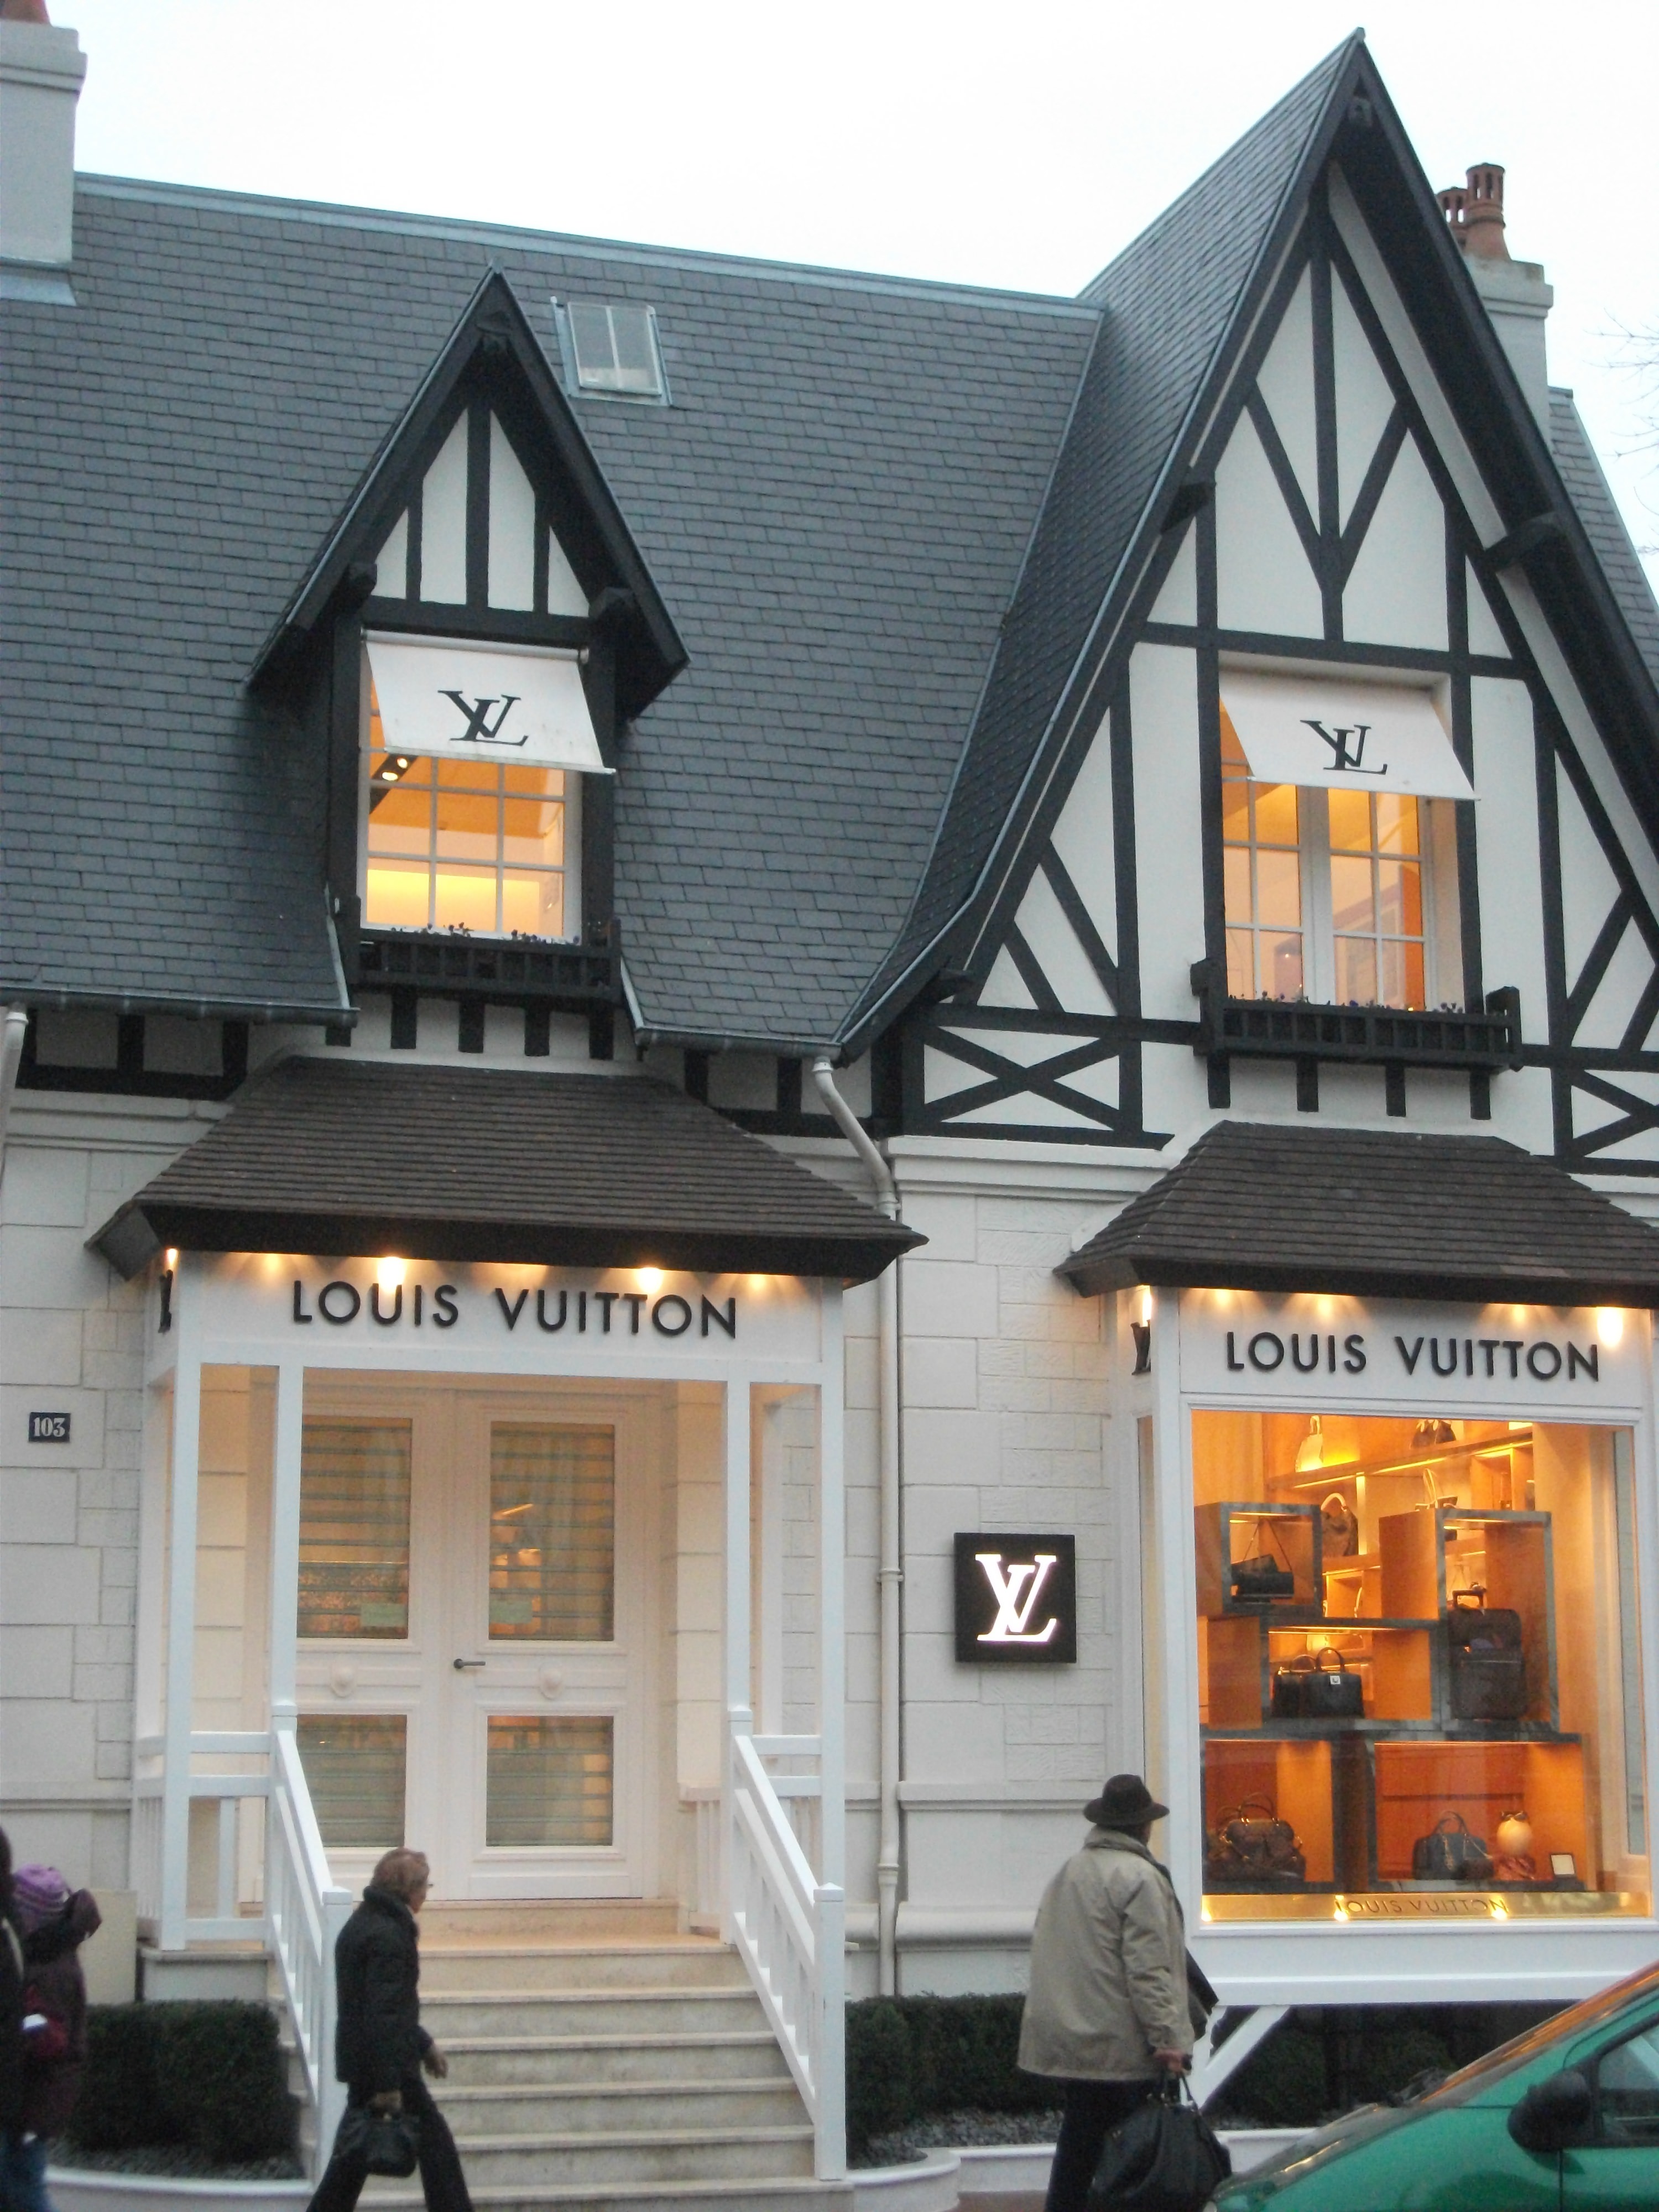 Louis Vuitton, Deauville, Normandy, France, December 2011